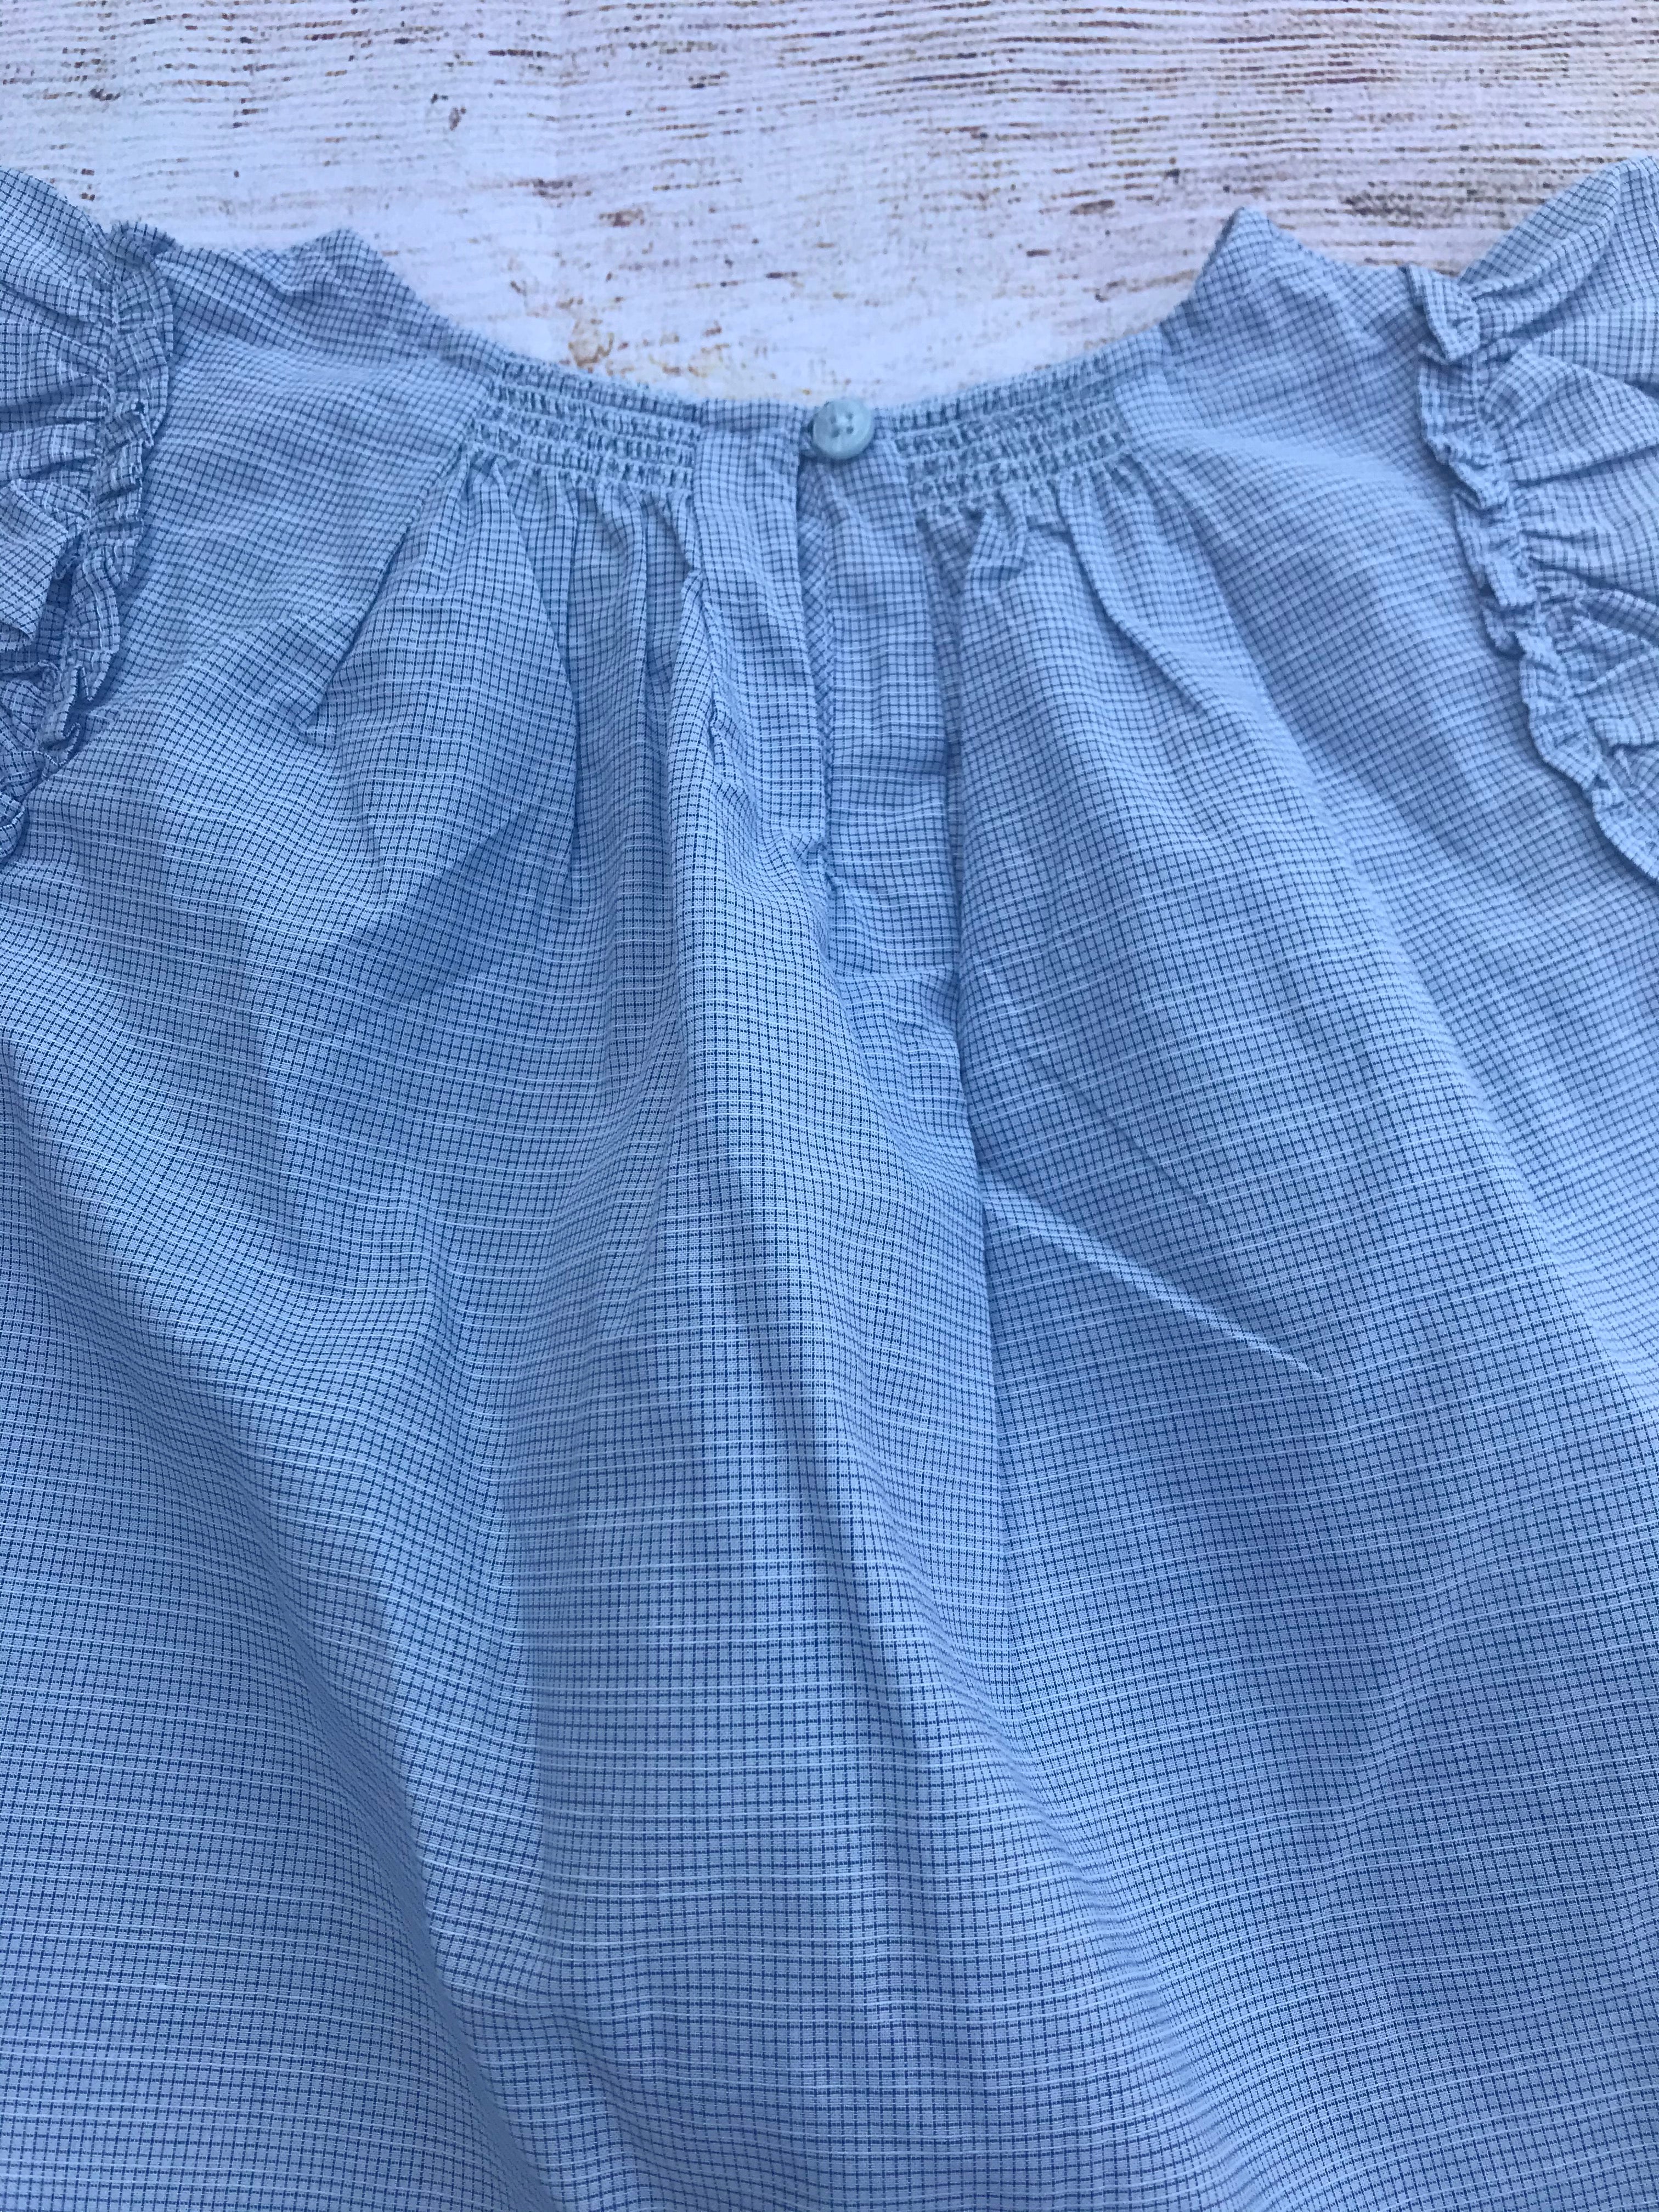 Osh Kosh Girls Pillowcase Dress Blue Checked Sz 5